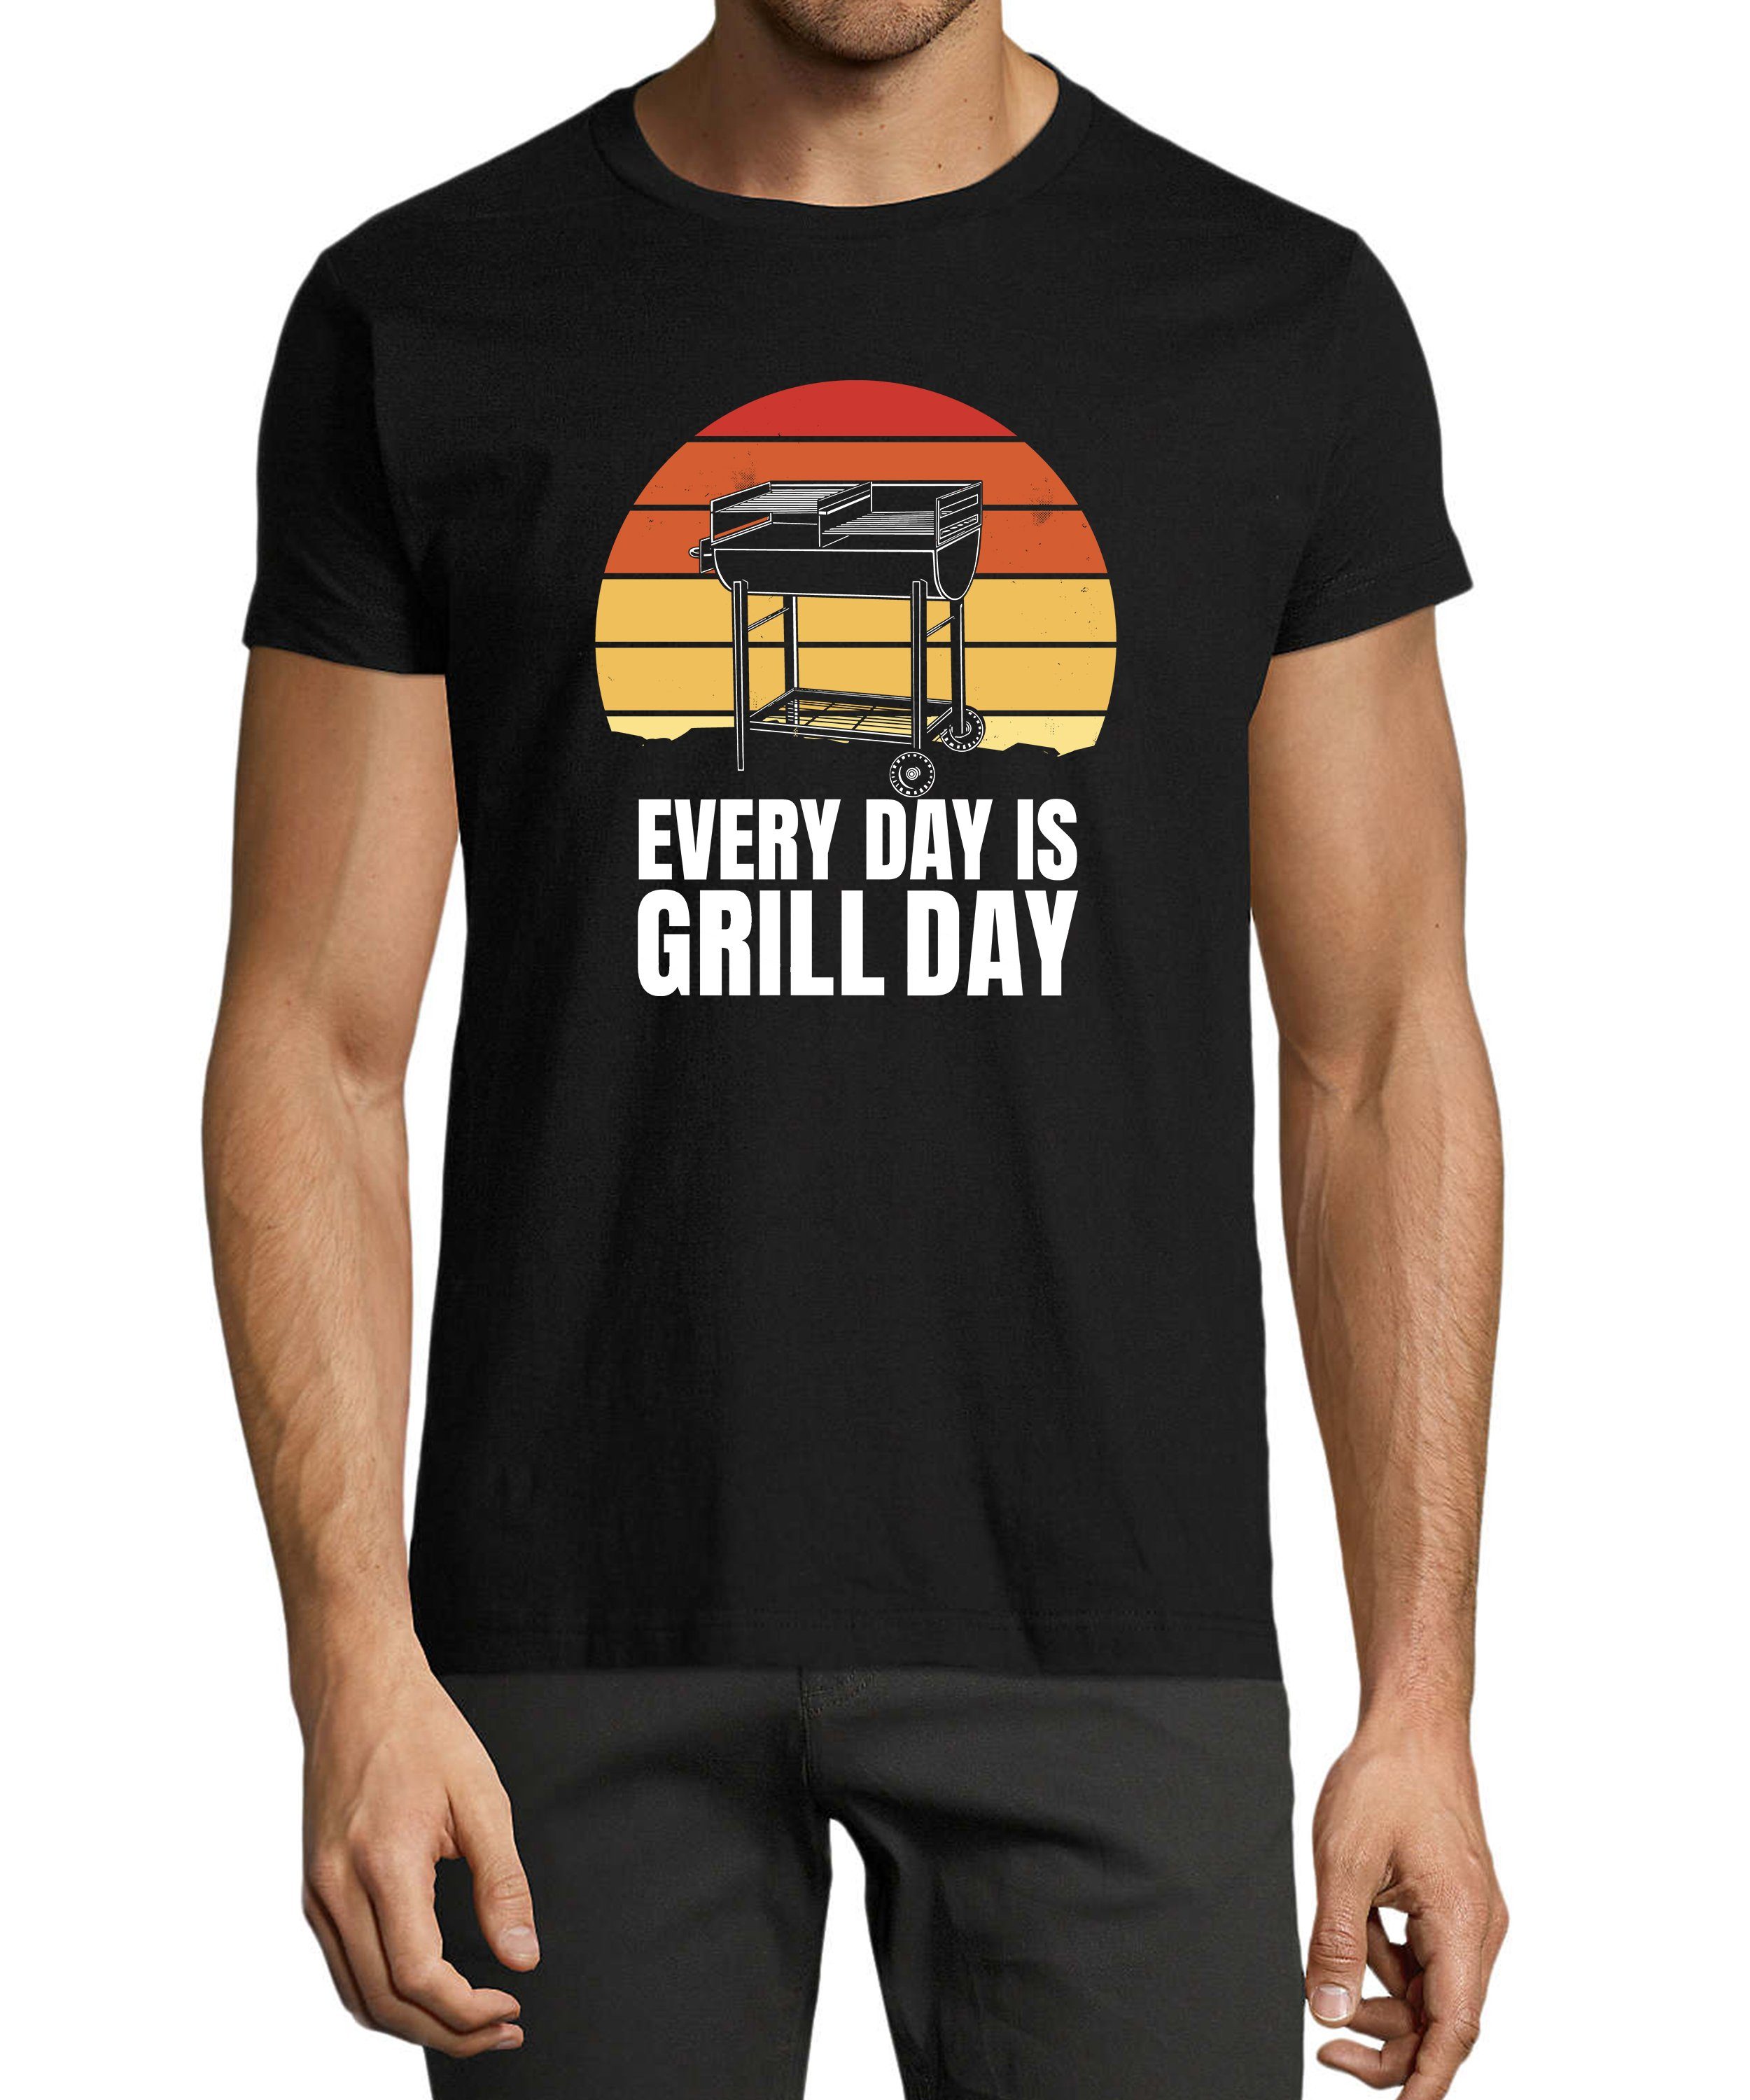 MyDesign24 T-Shirt Herren BBQ Print Shirt - Retro Grill T-Shirt Every Day is a Grill Day Baumwollshirt mit Aufdruck Regular Fit, i300 schwarz